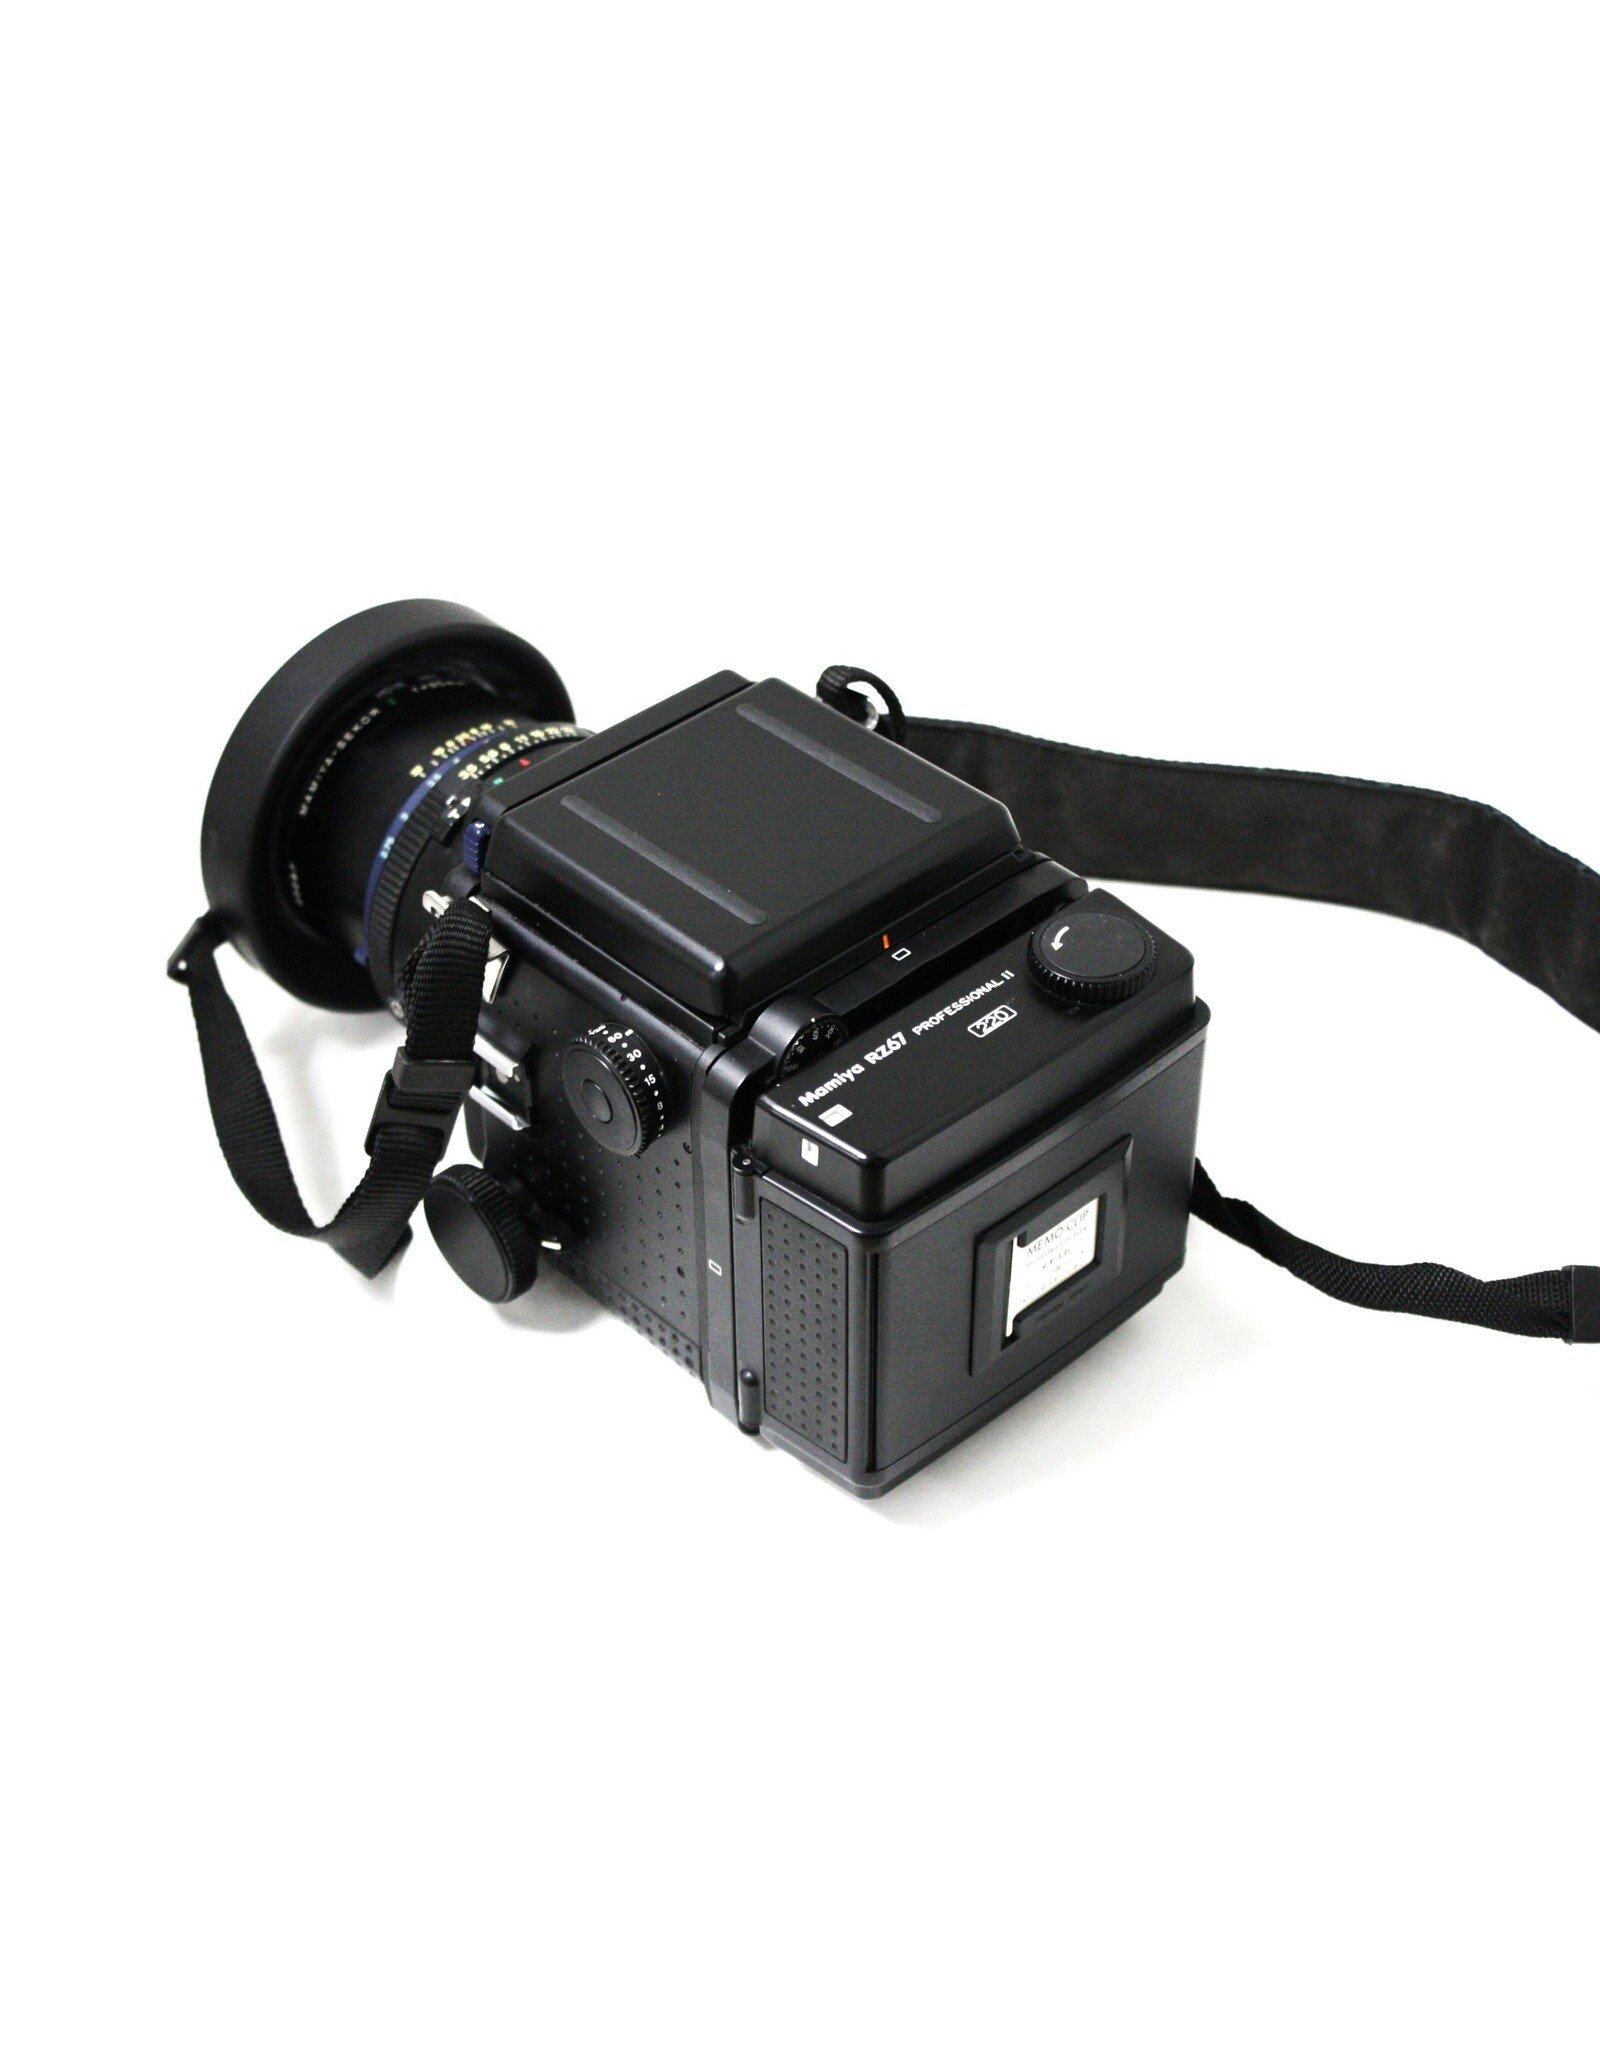 Mamiya RZ67 Pro + Sekor Z 90mm f/3.5 W + (2) 220 Film Backs